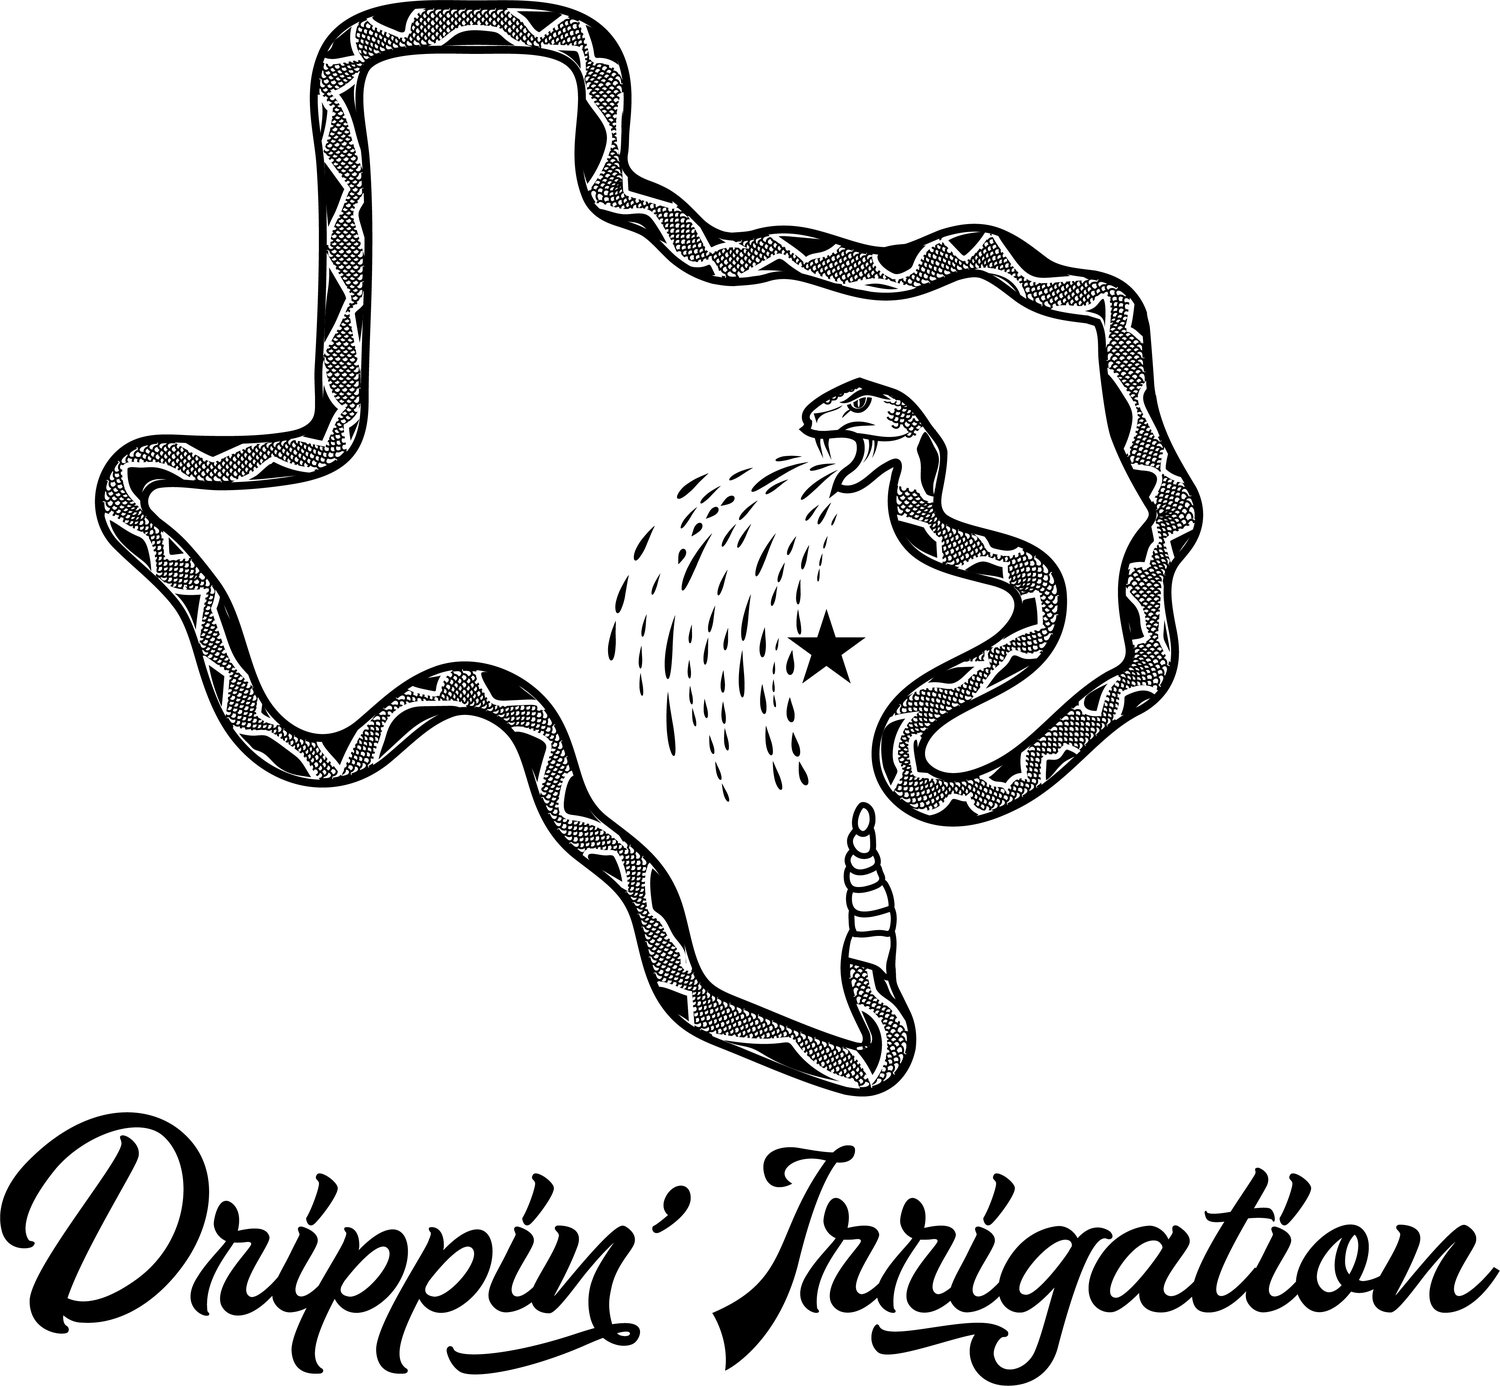 Drippin' Irrigation